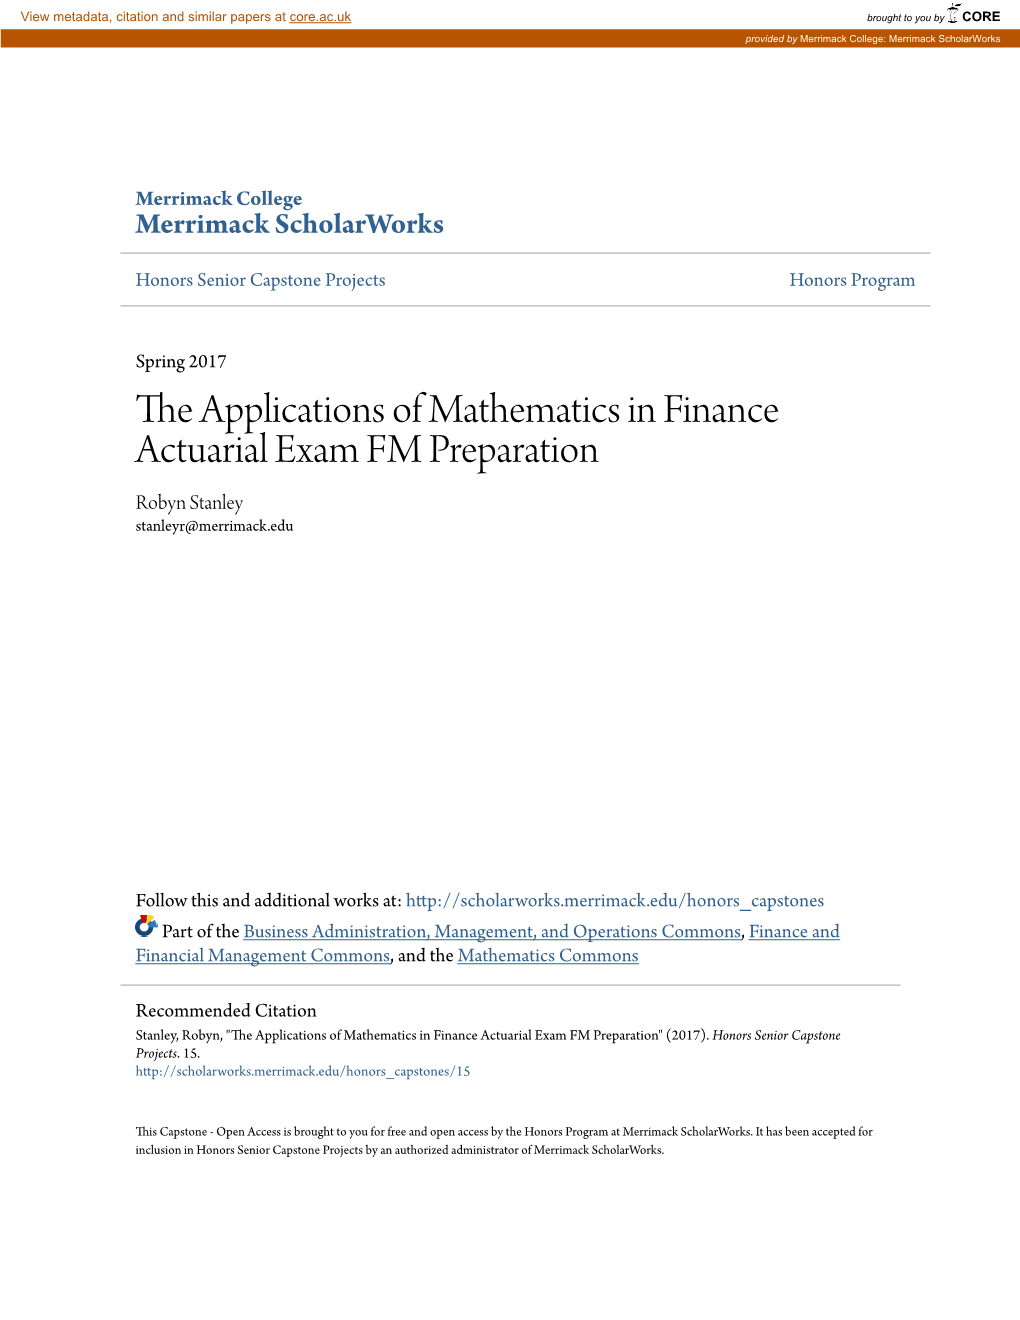 The Applications of Mathematics in Finance Actuarial Exam FM Preparation Robyn Stanley Stanleyr@Merrimack.Edu